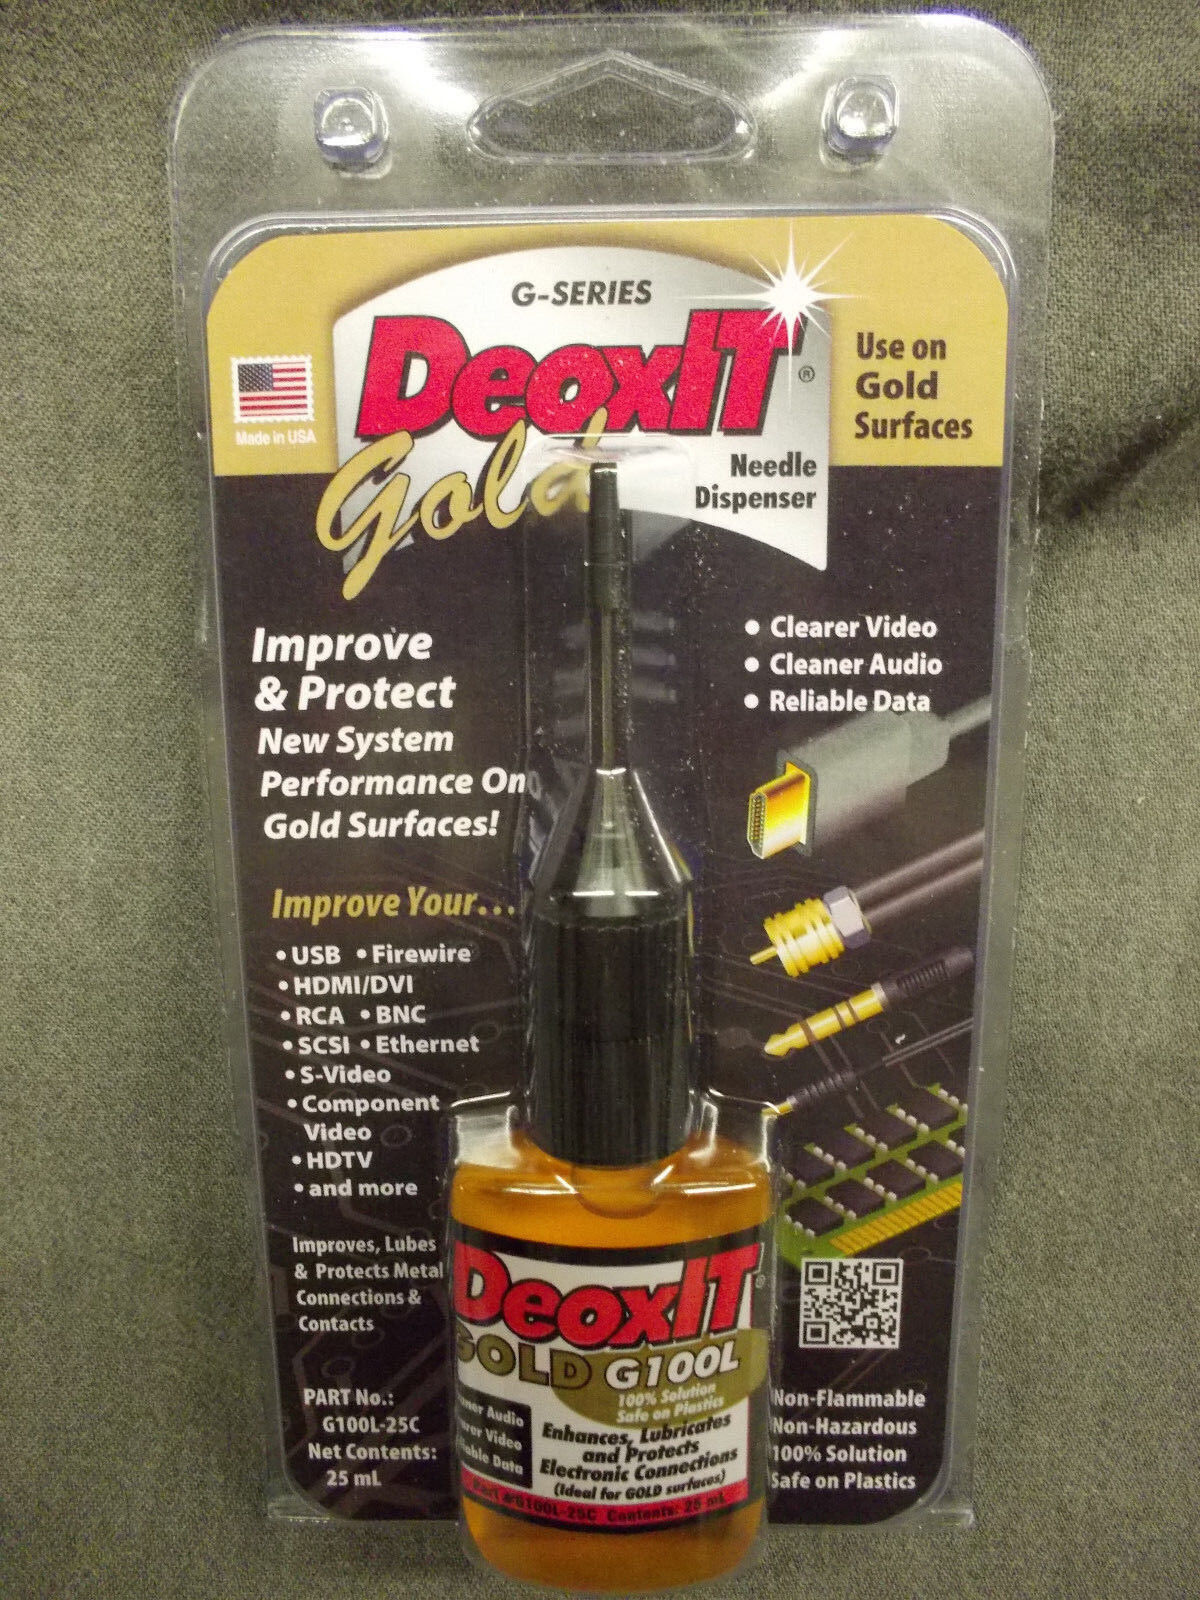 Deoxit Gold 100%, 25ml Bottle w/Needle Dispenser, G100L -25C, Caig Laboratories. Available Now for $49.75